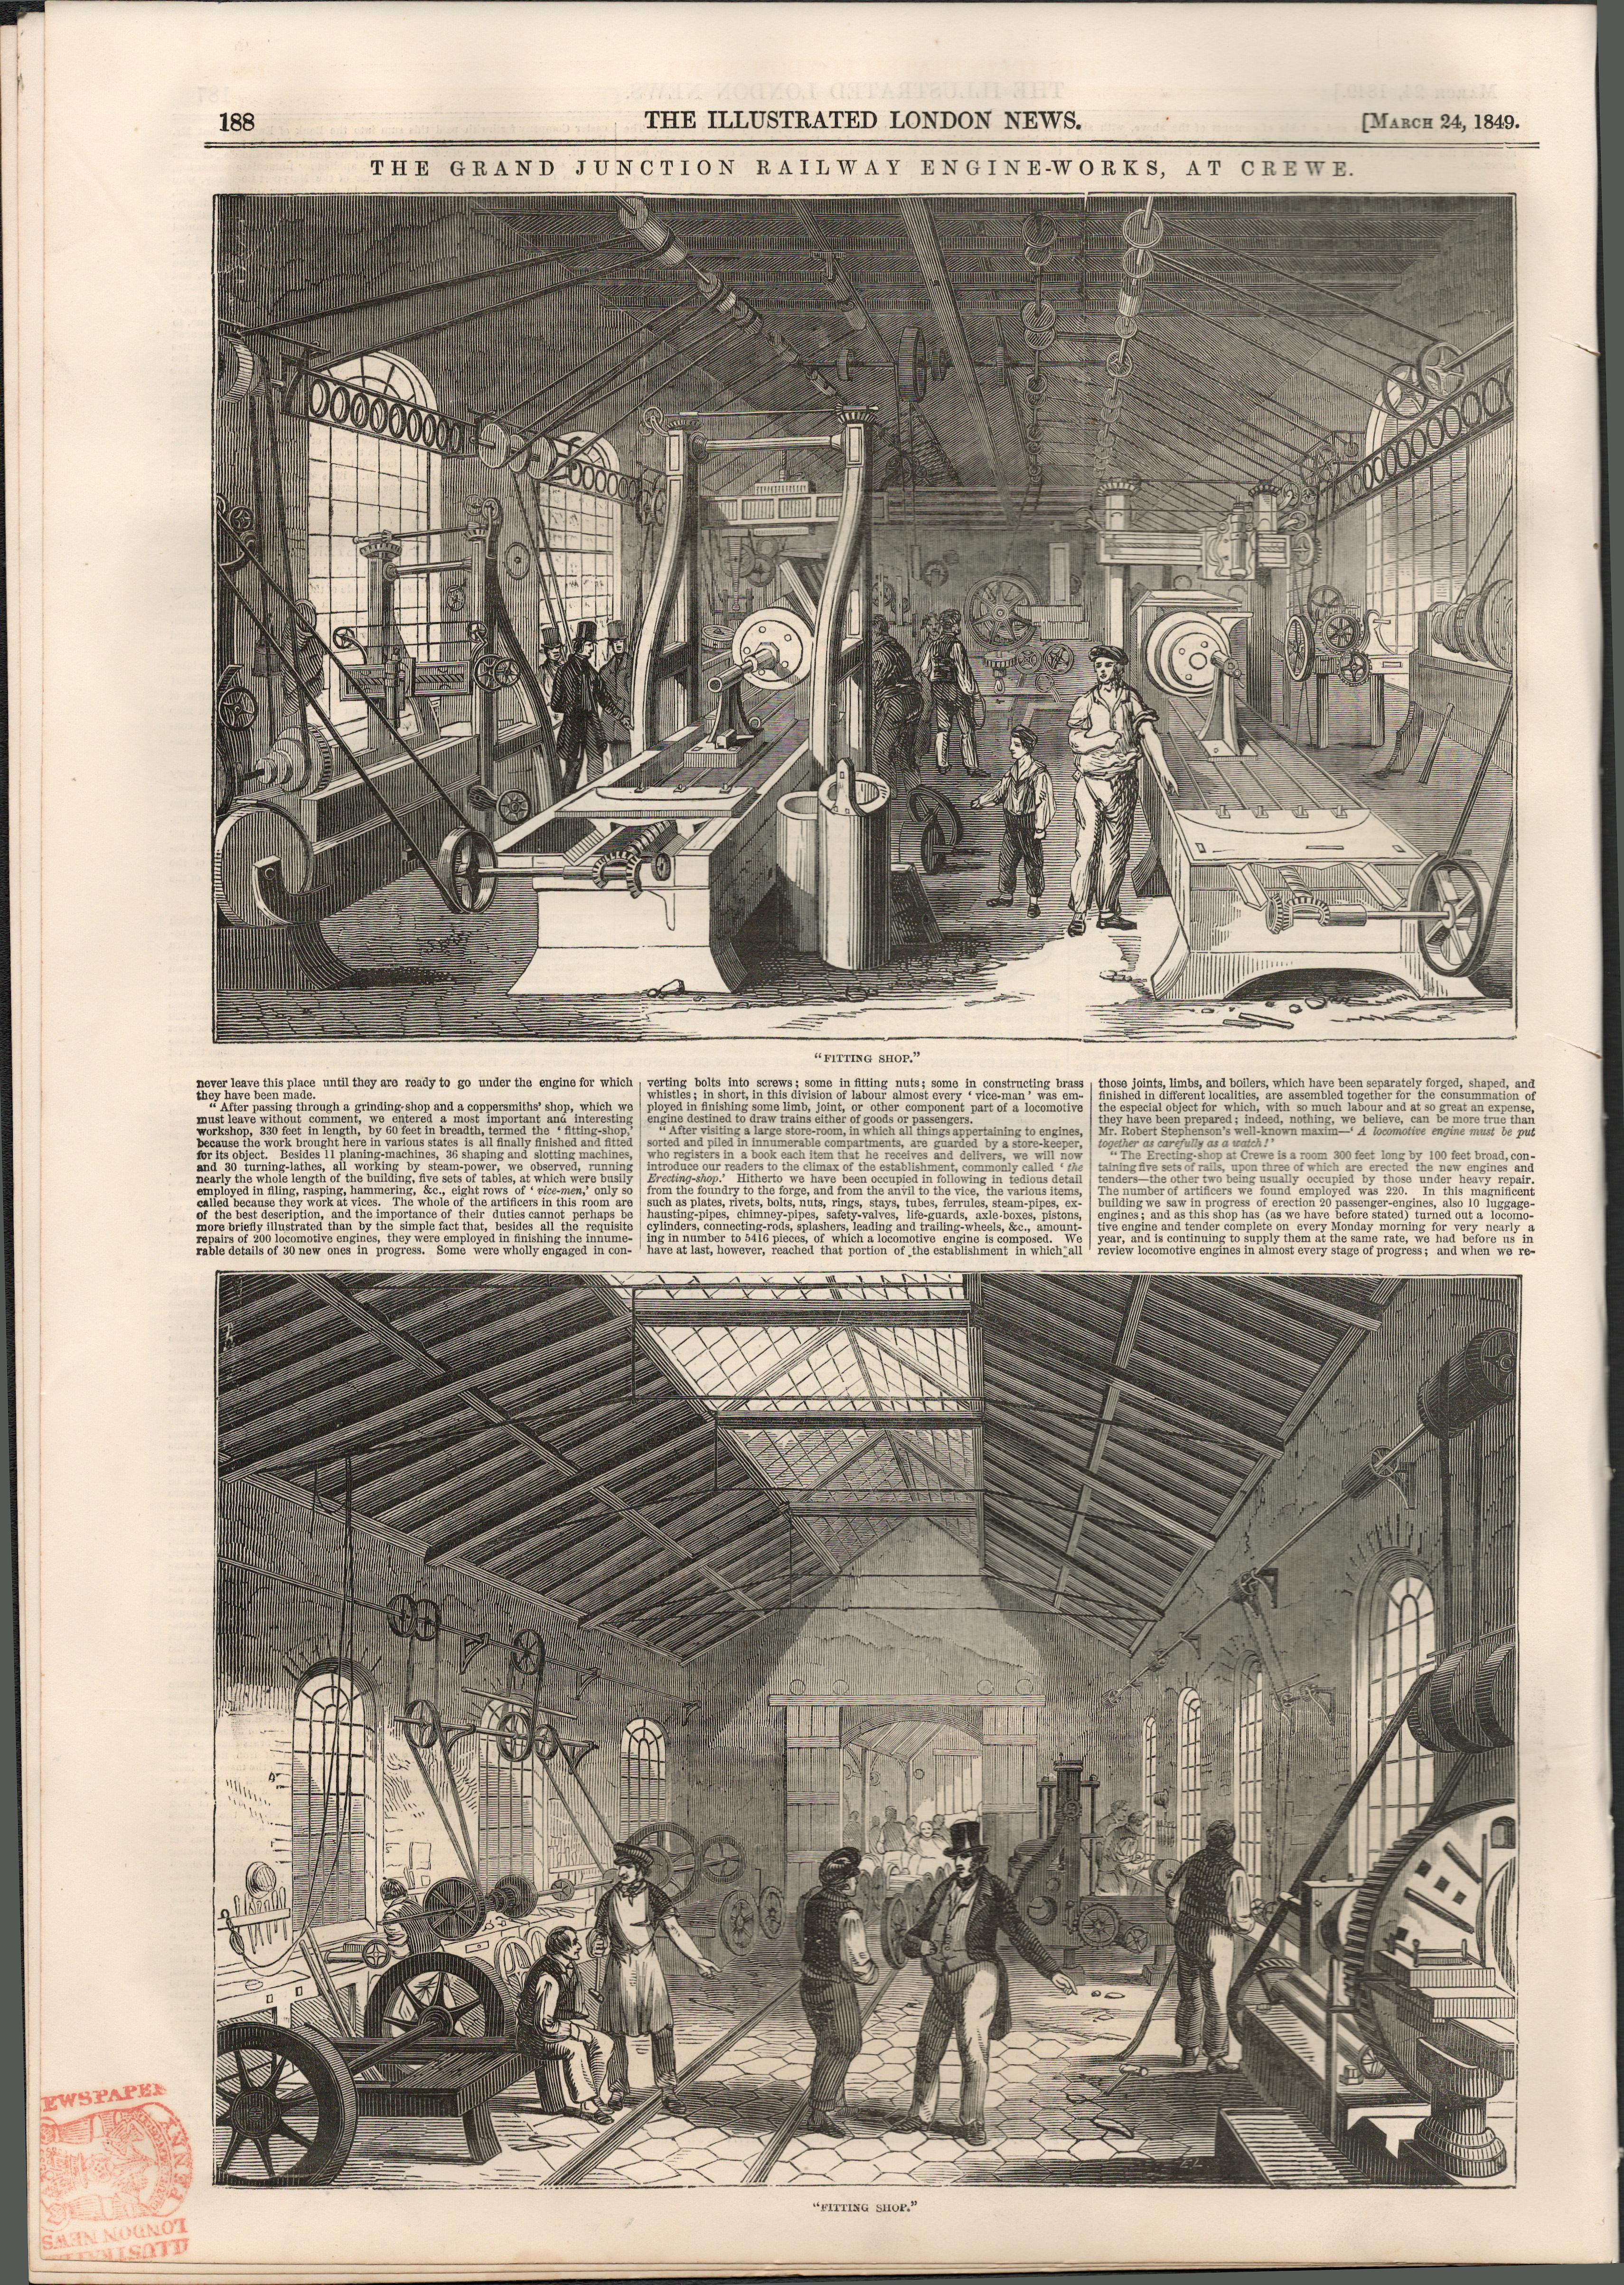 1849 Victorian Railway Engine Works at Crewe Junction Newspaper.